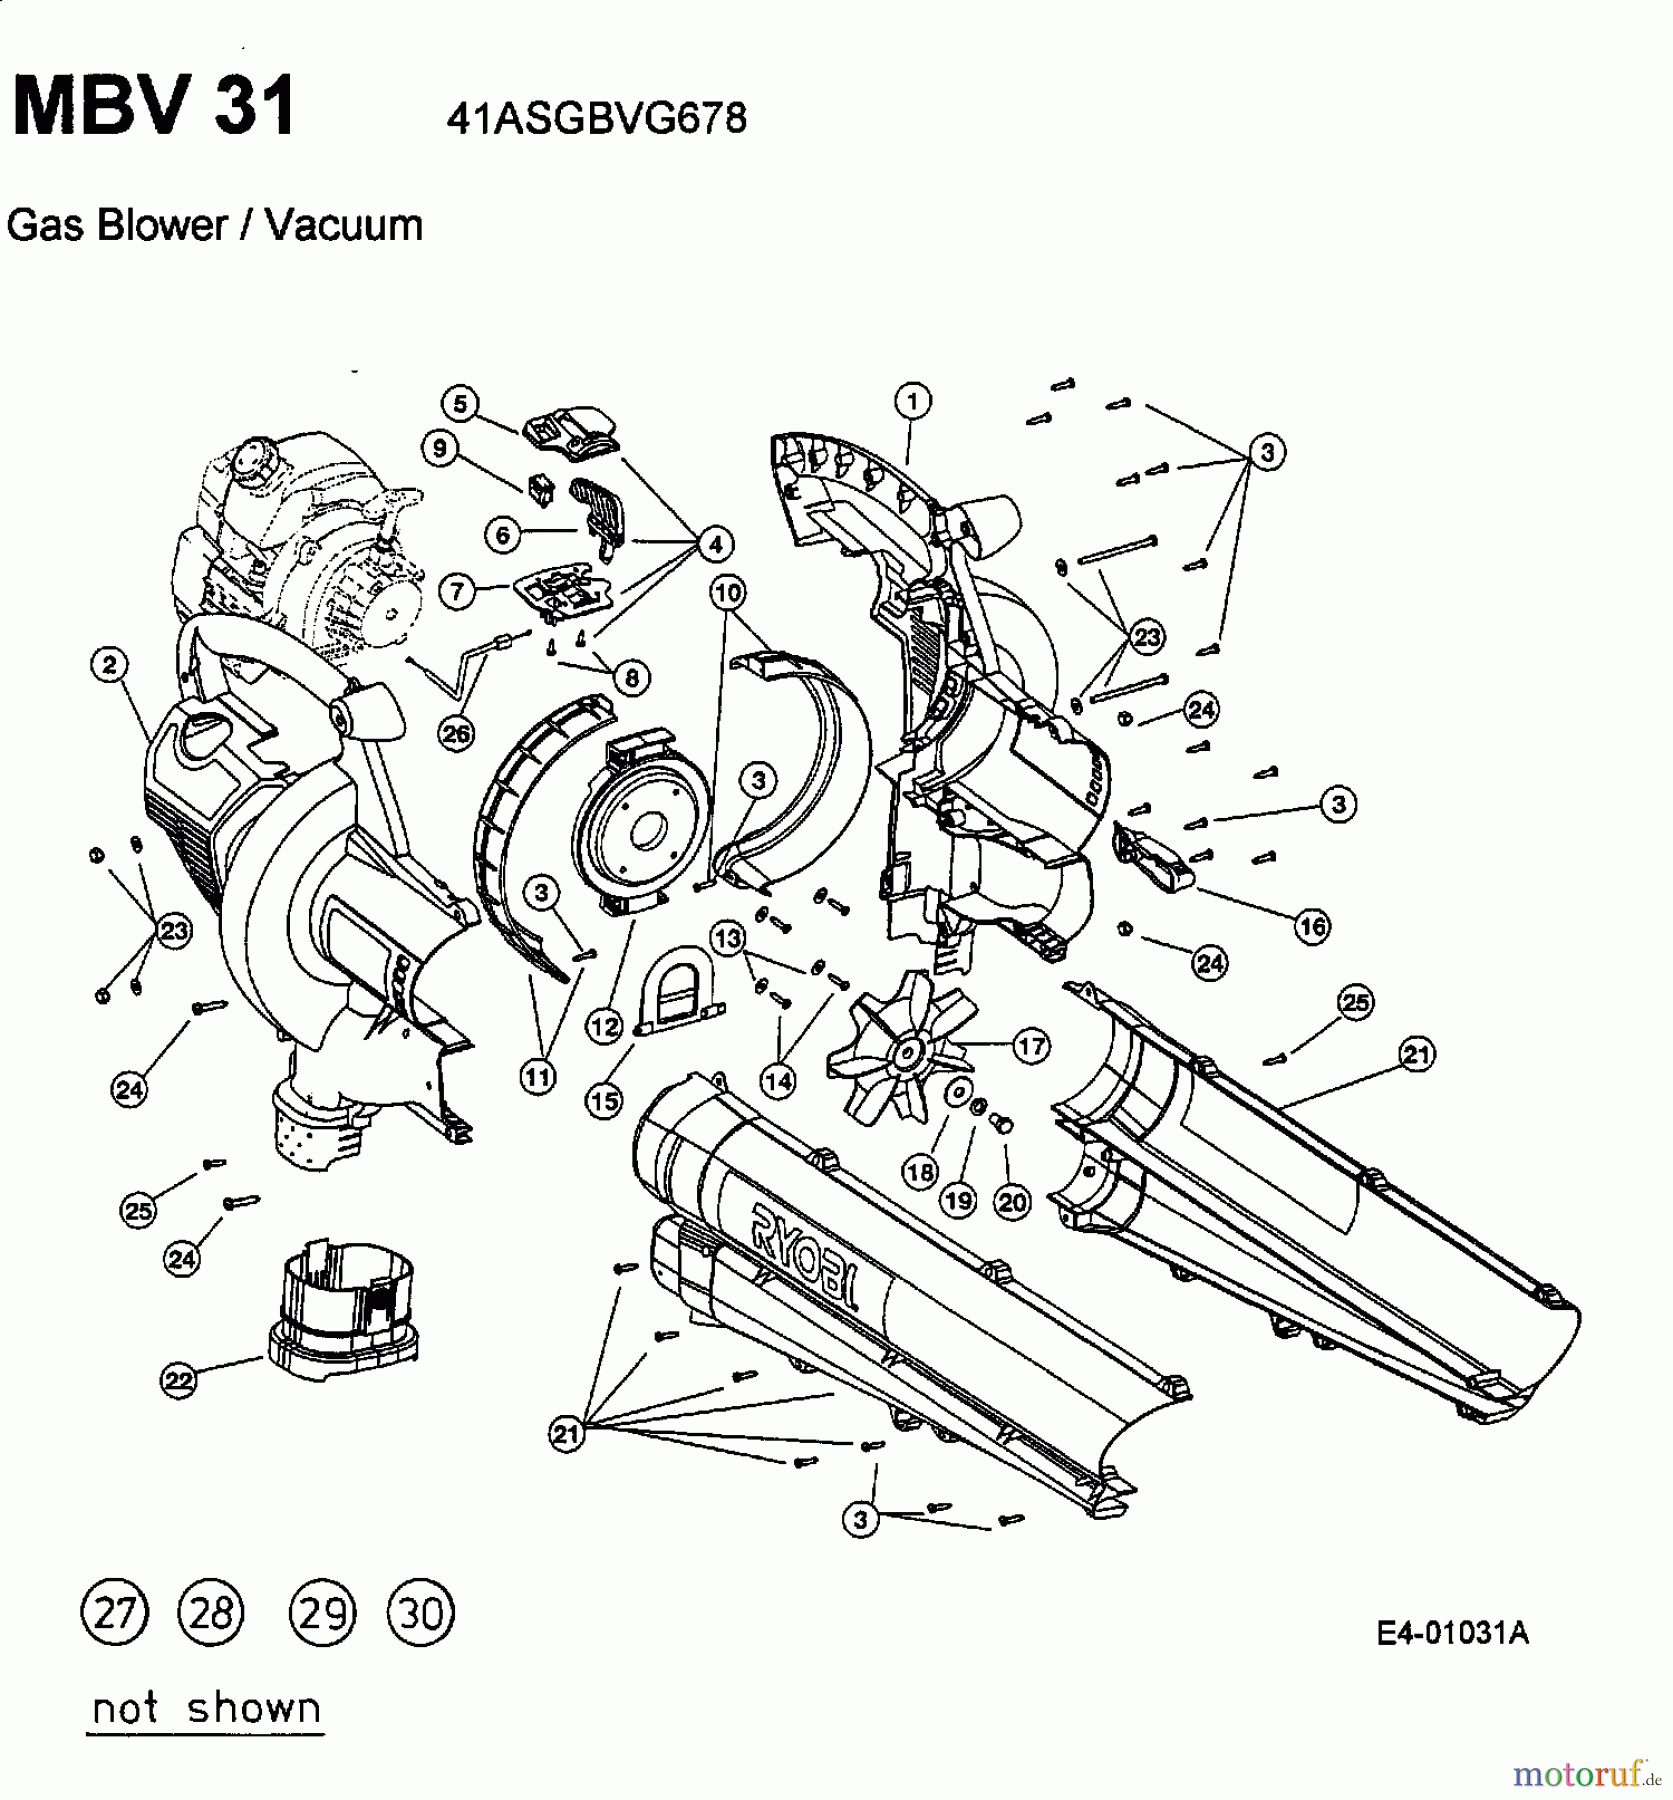  MTD Laubbläser, Laubsauger MBV 31 41ASGBVG678  (2002) Grundgerät